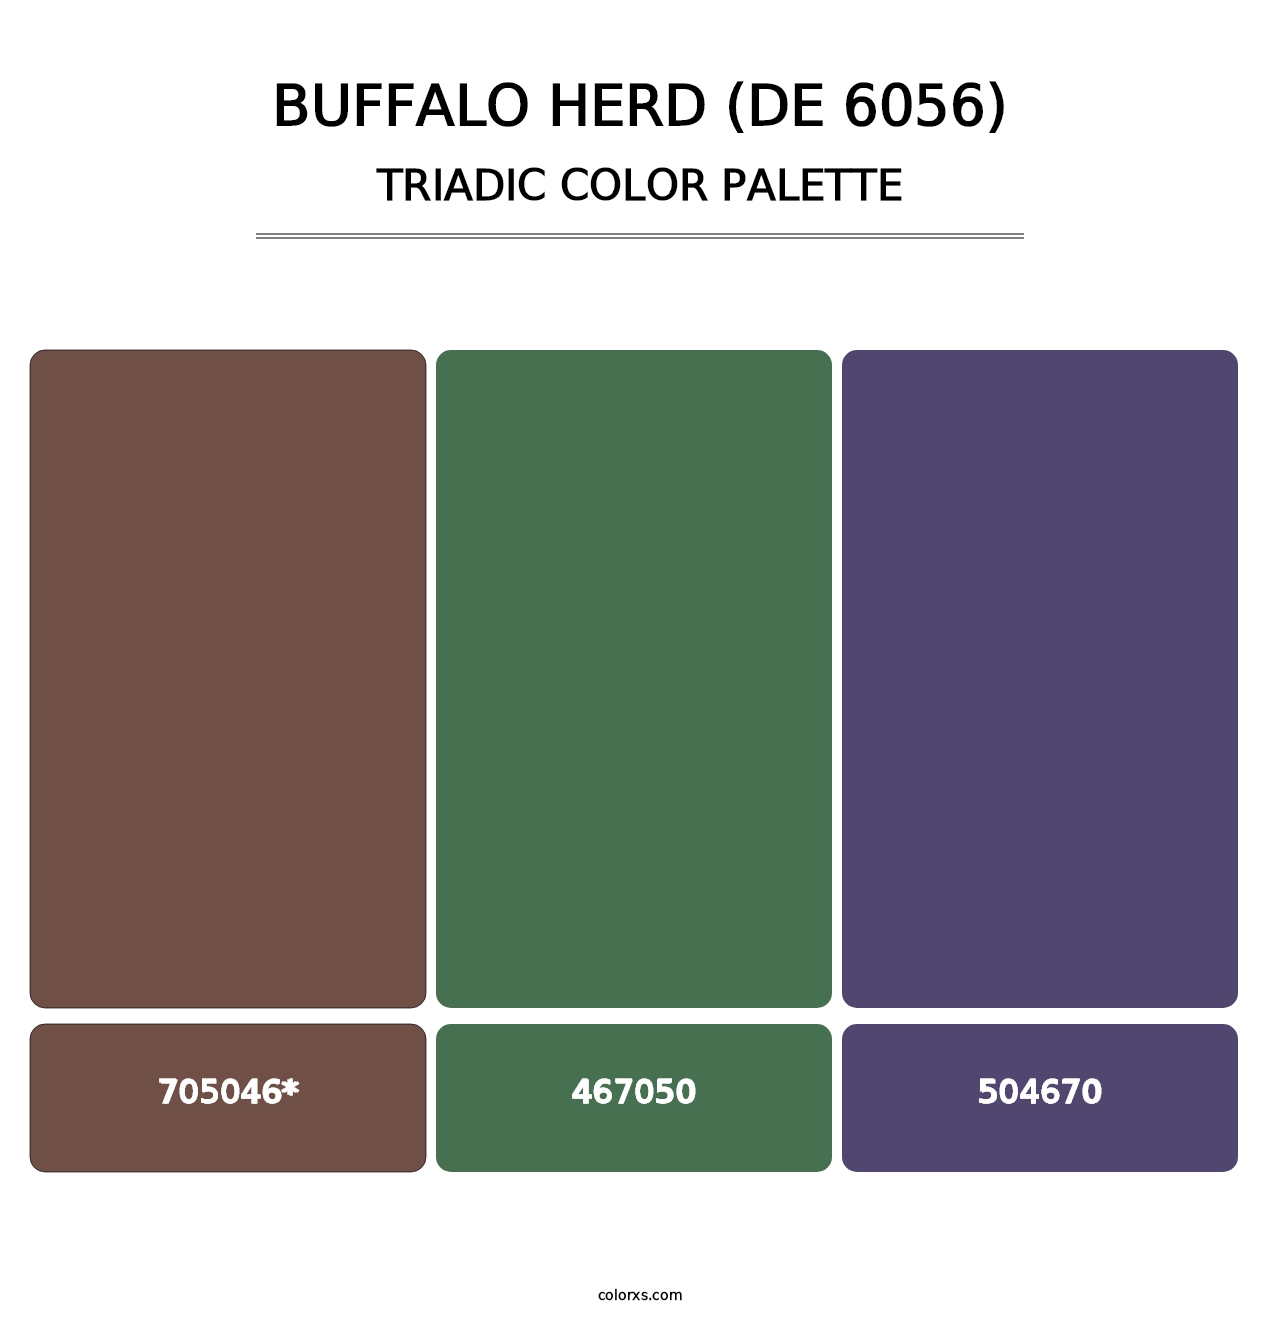 Buffalo Herd (DE 6056) - Triadic Color Palette